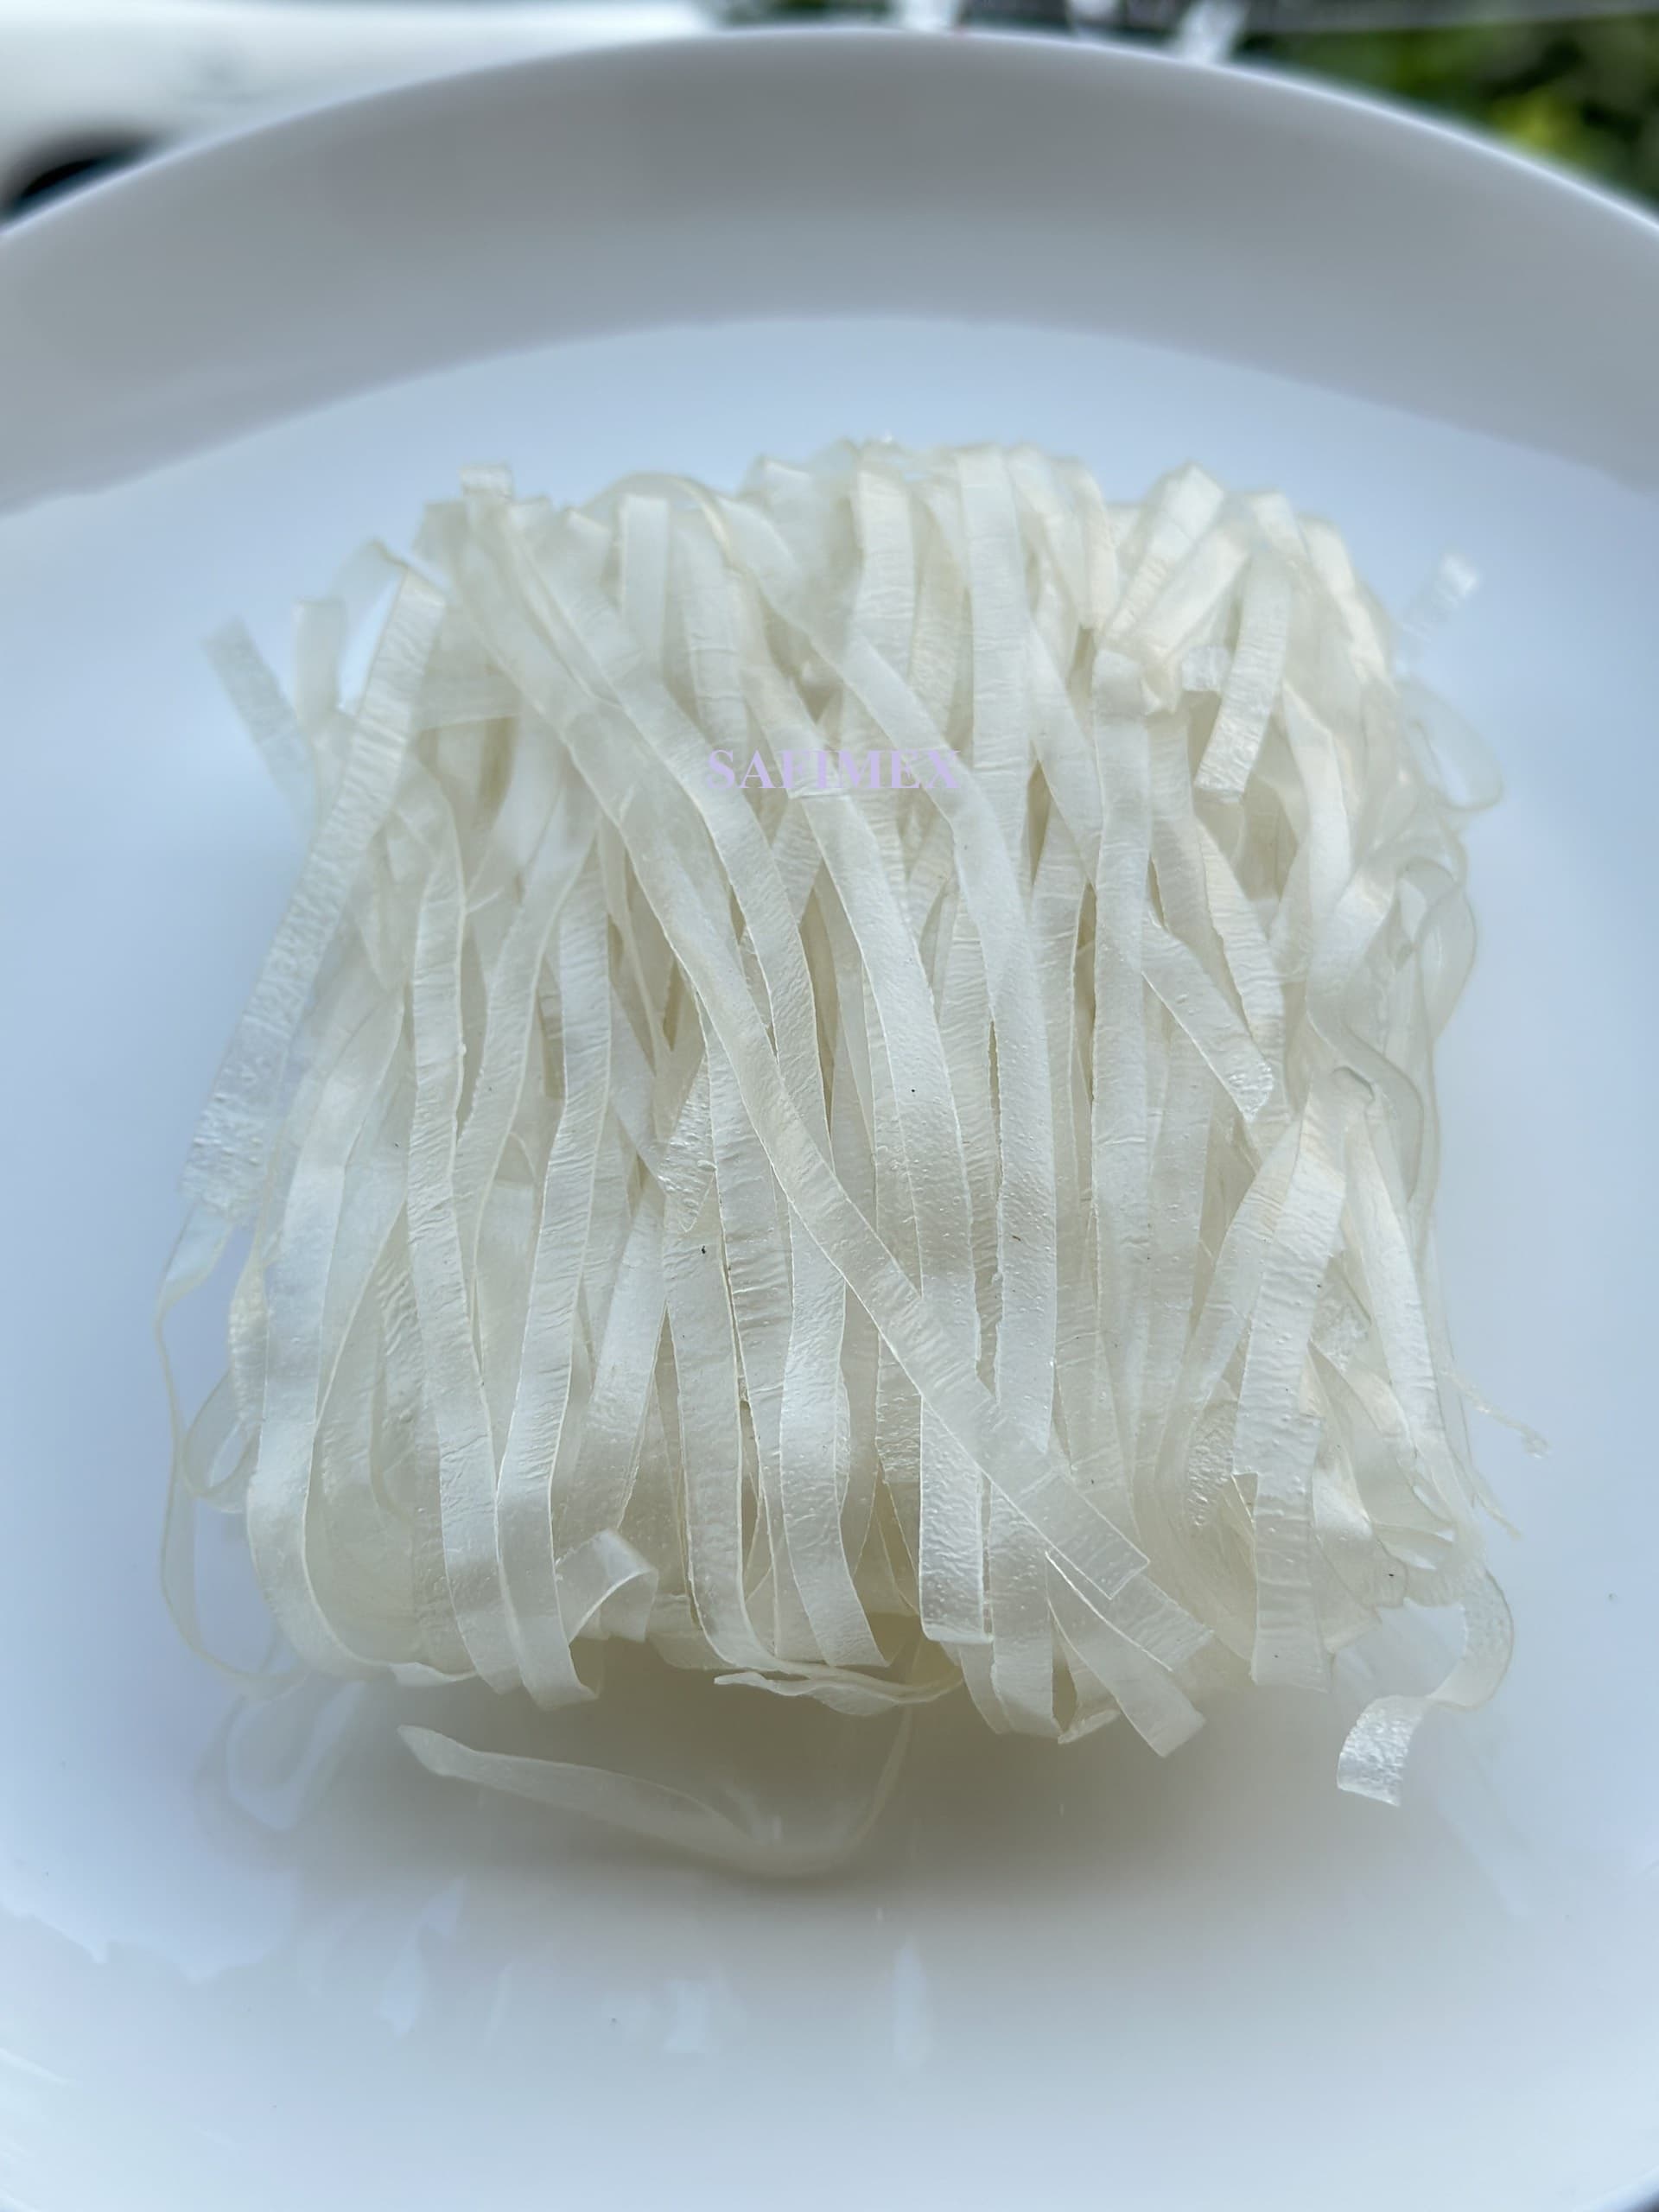 Dried instant pho noodle gluten free OEM service 60gram pack from Vietnam _Vietnamese instant noodle